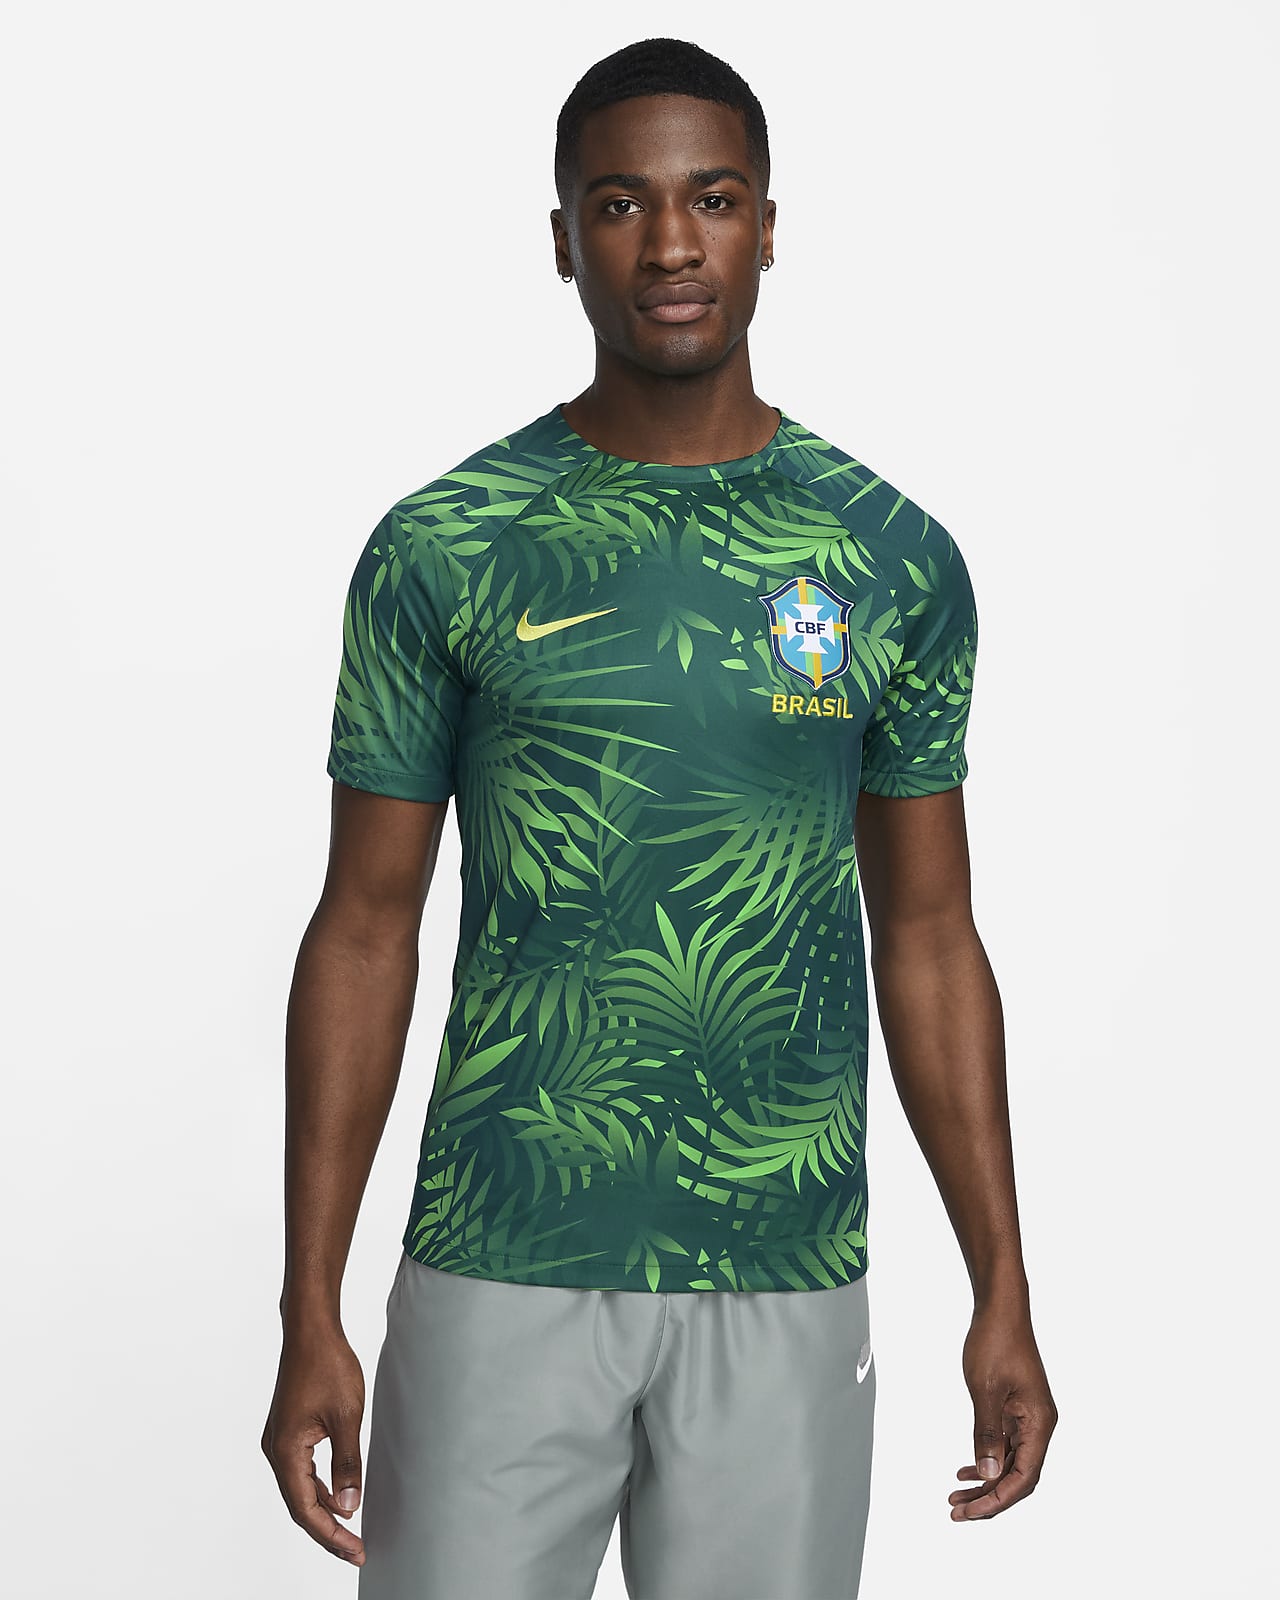 Nike Brazil CBF Academy Pro Full-Zip Knit Soccer Jacket 2022/23 - Green,  Navy Blue & Yellow